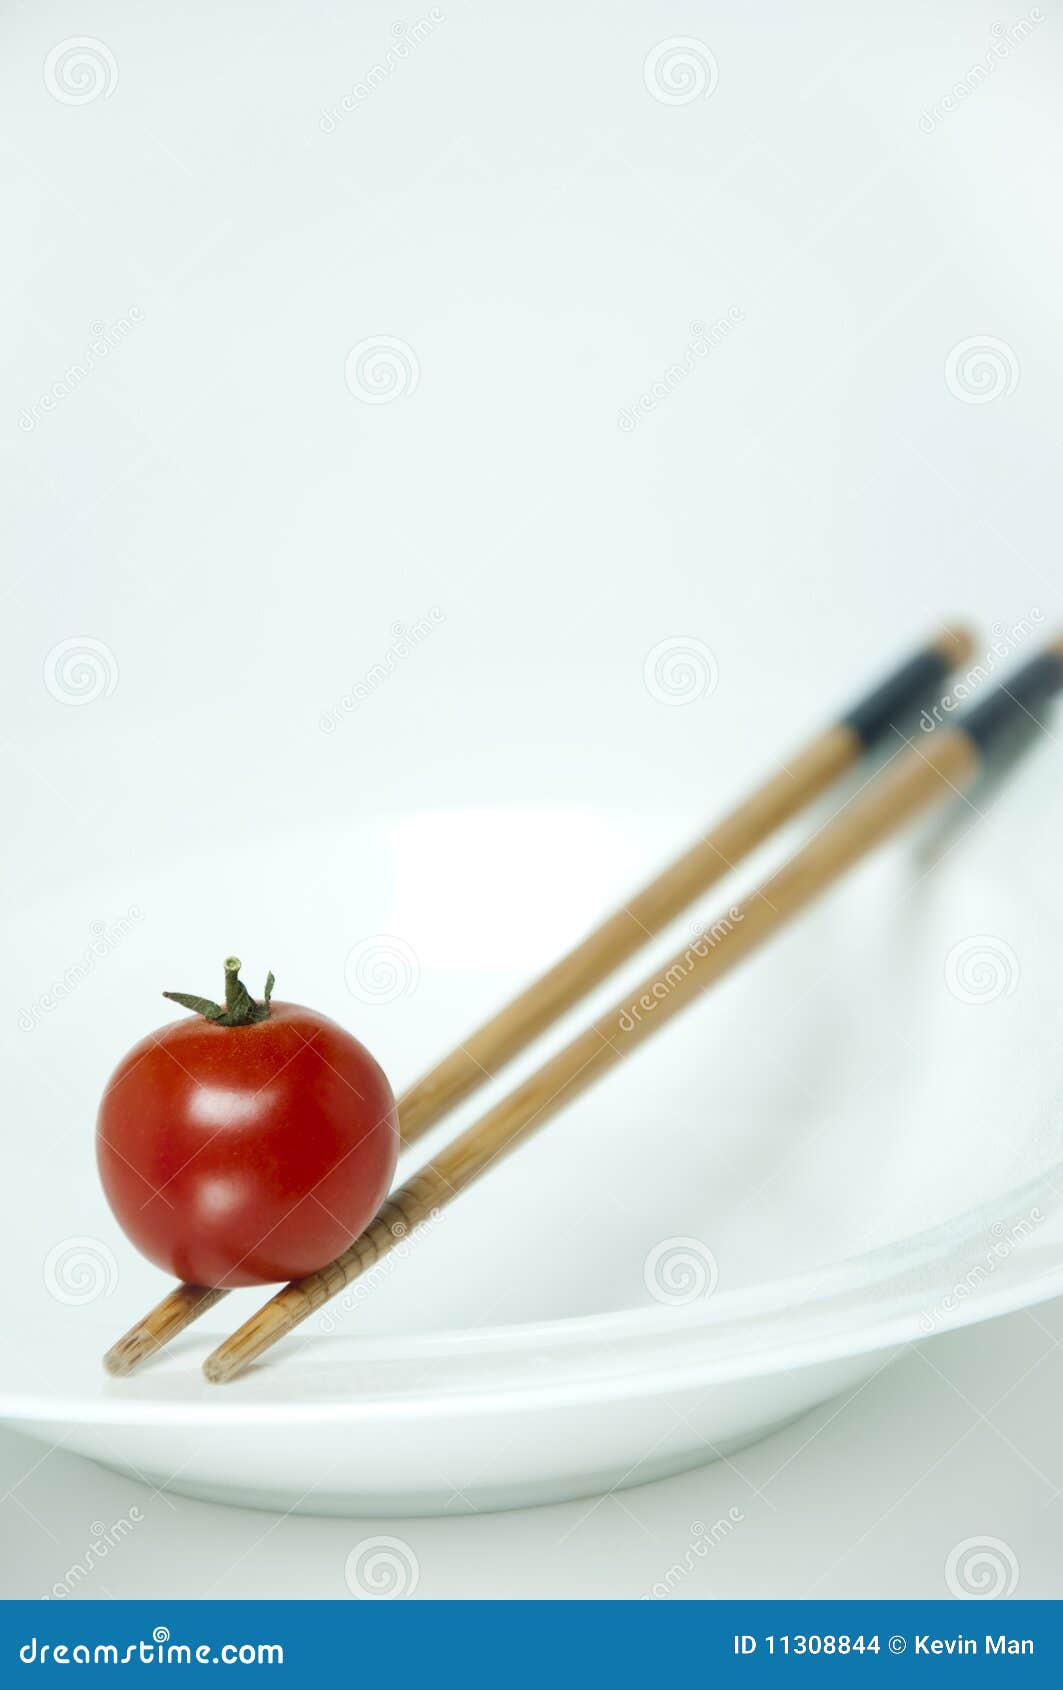 East meet west. A balance tomato on a chopstick